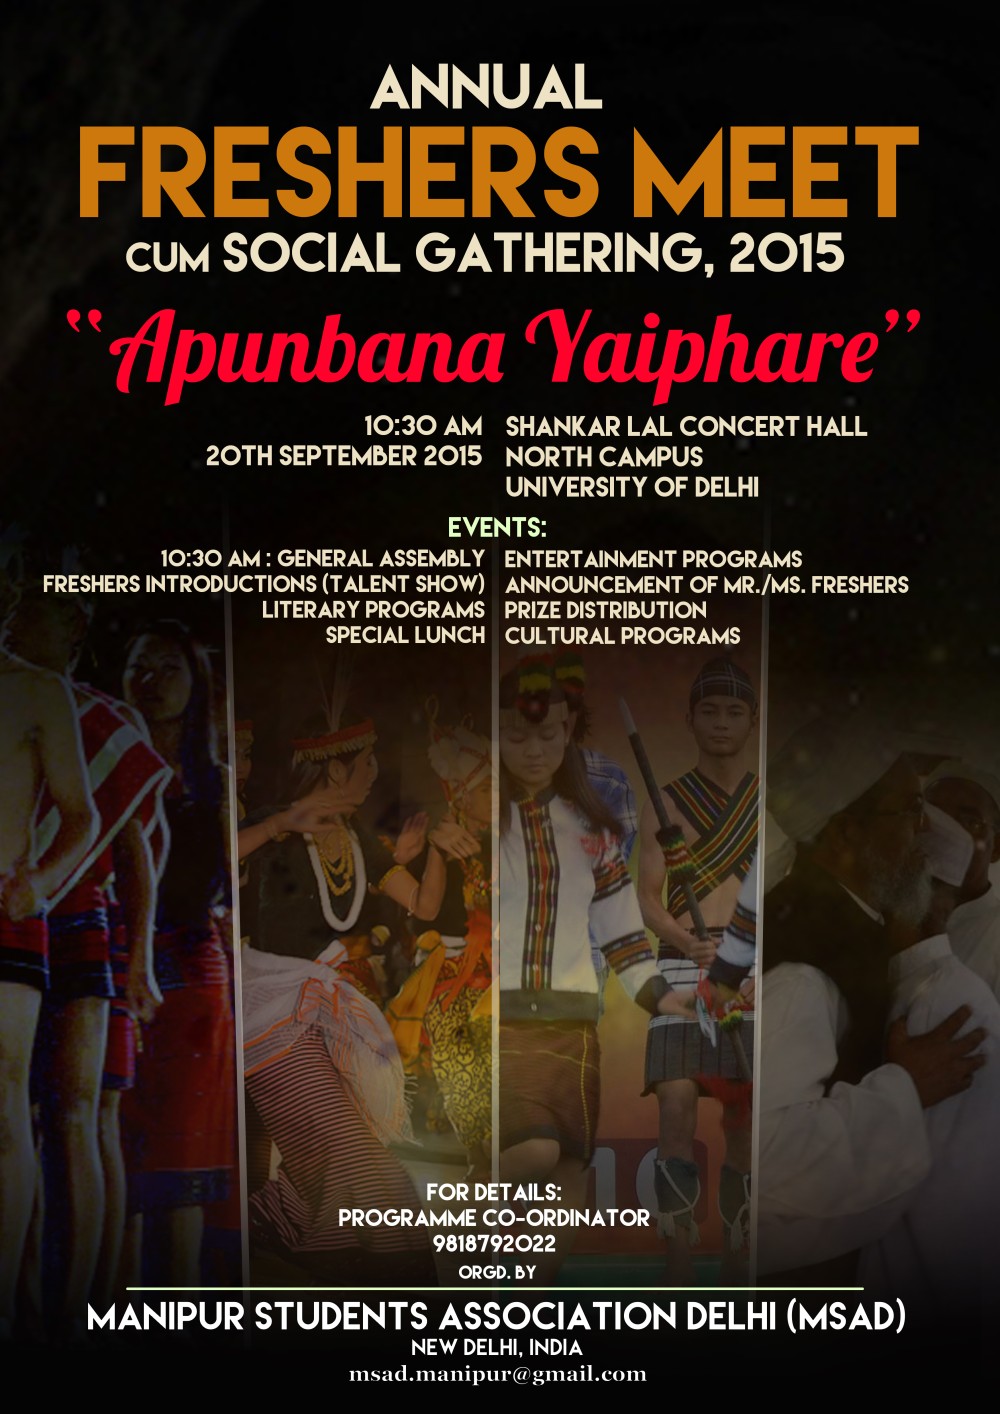 MSAD Annual Freshers' Meet cum Social Gathering 2015